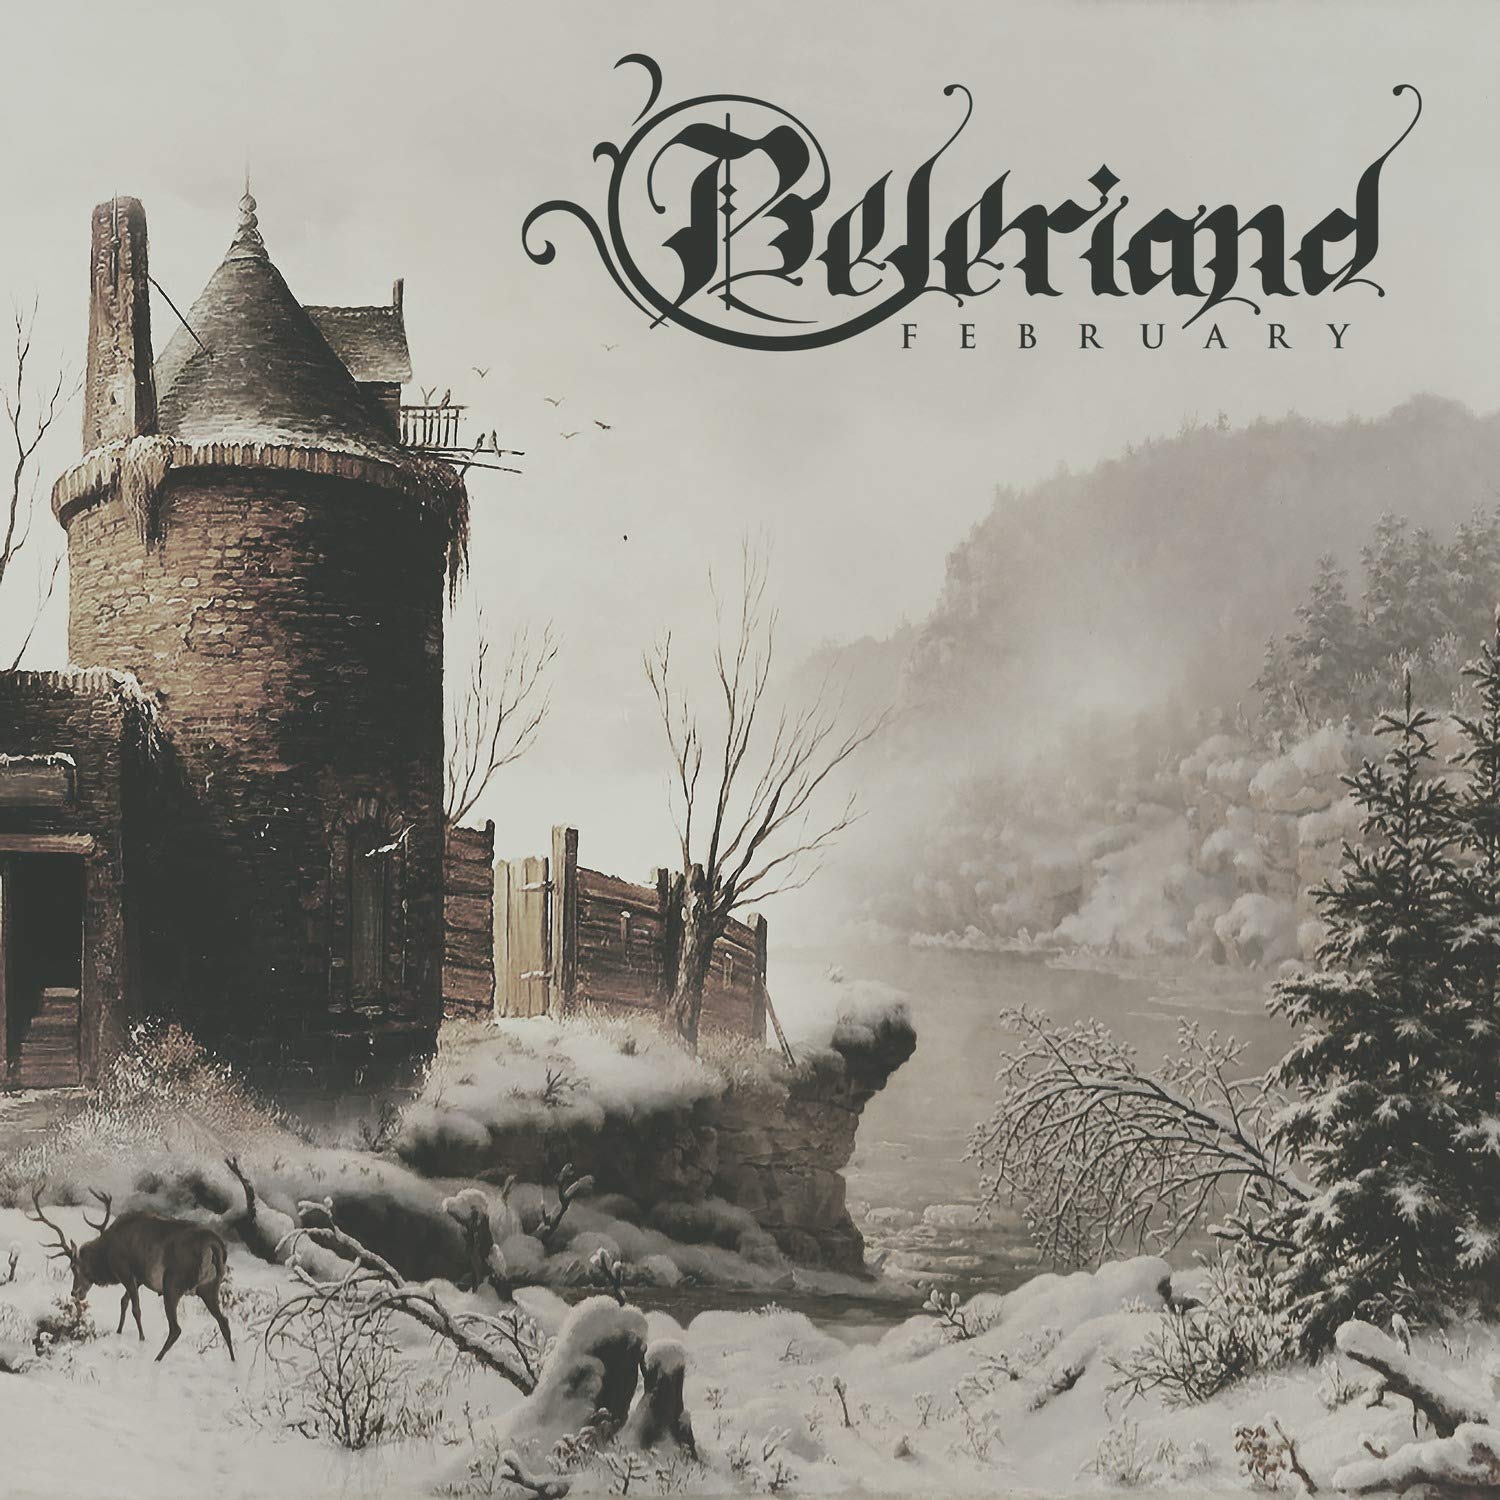 Beleriand - February (2021) [FLAC] Download